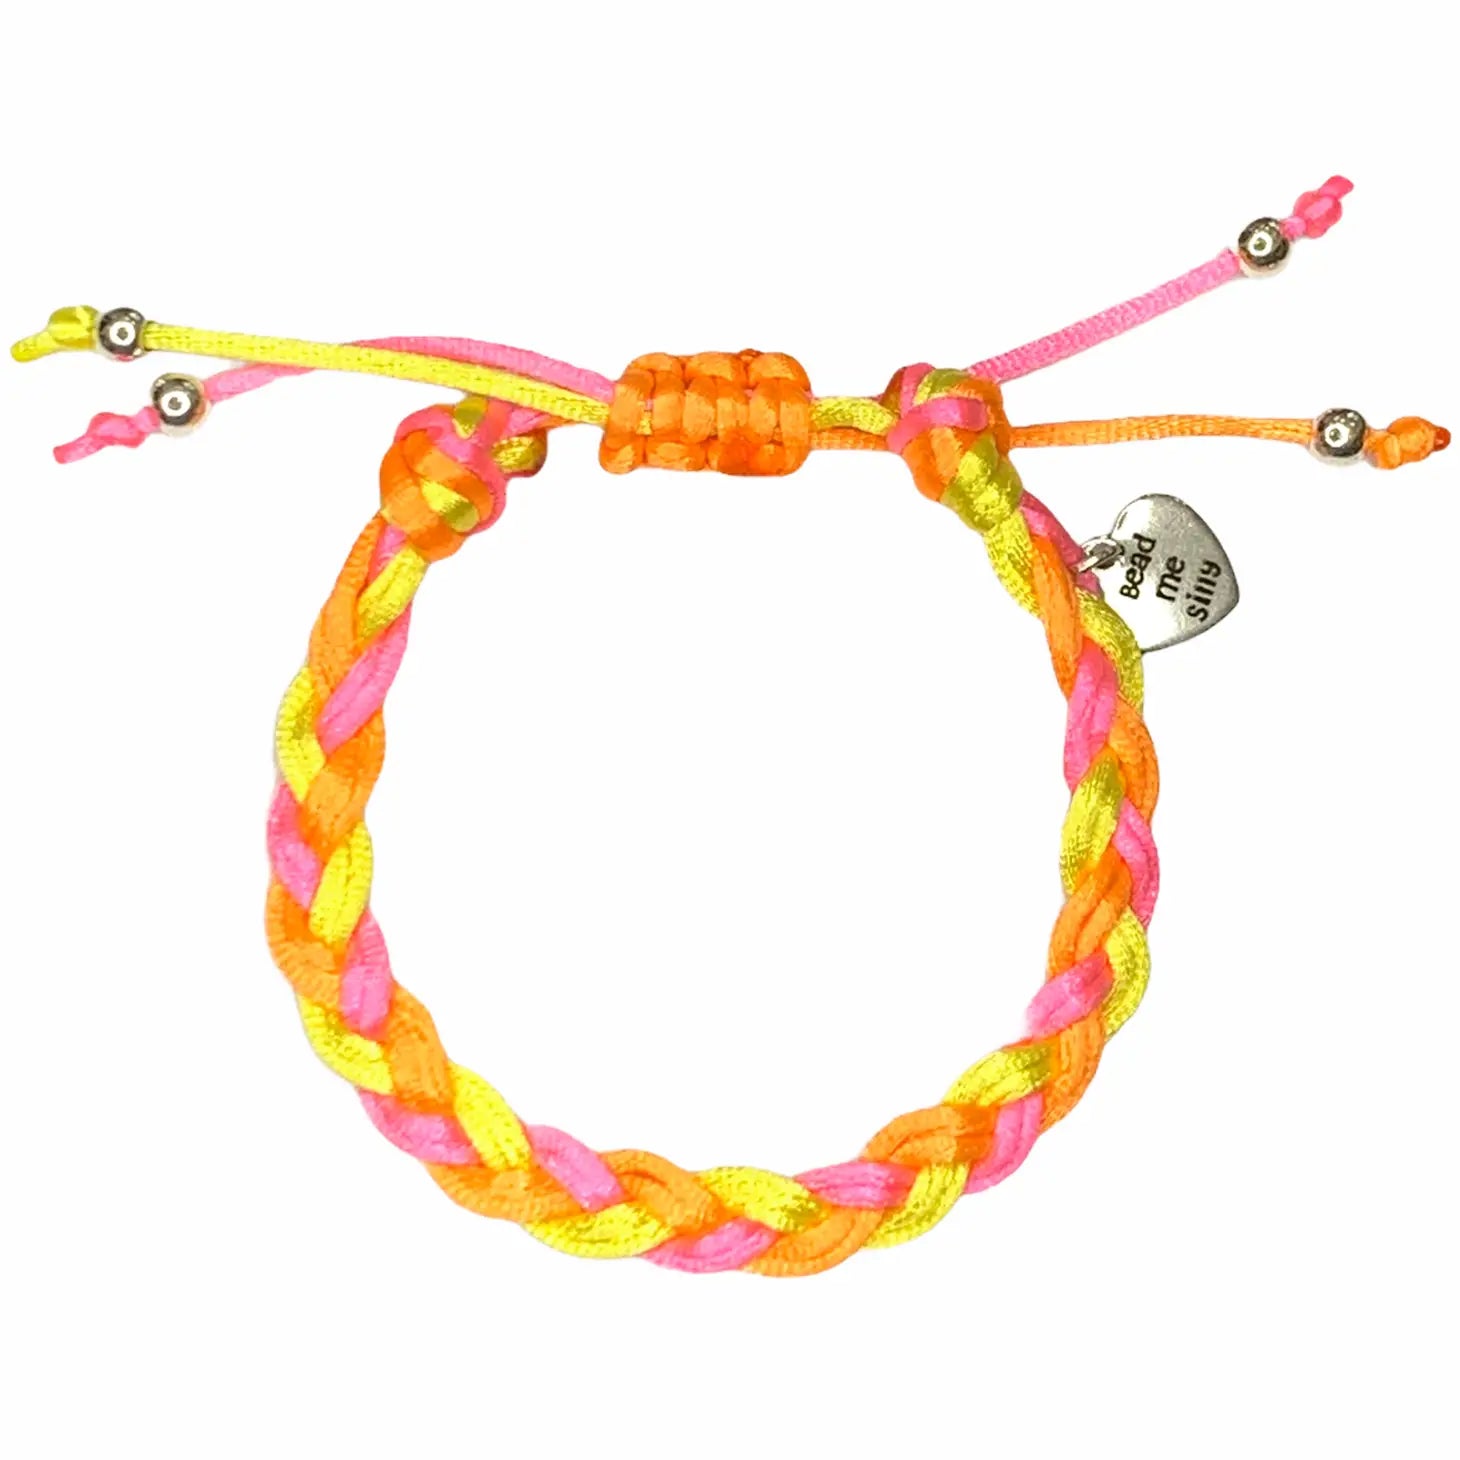 Assorted Adjustable Bracelets Pink/Yellow Neon - No Beads - Doodlebug's Children's Boutique